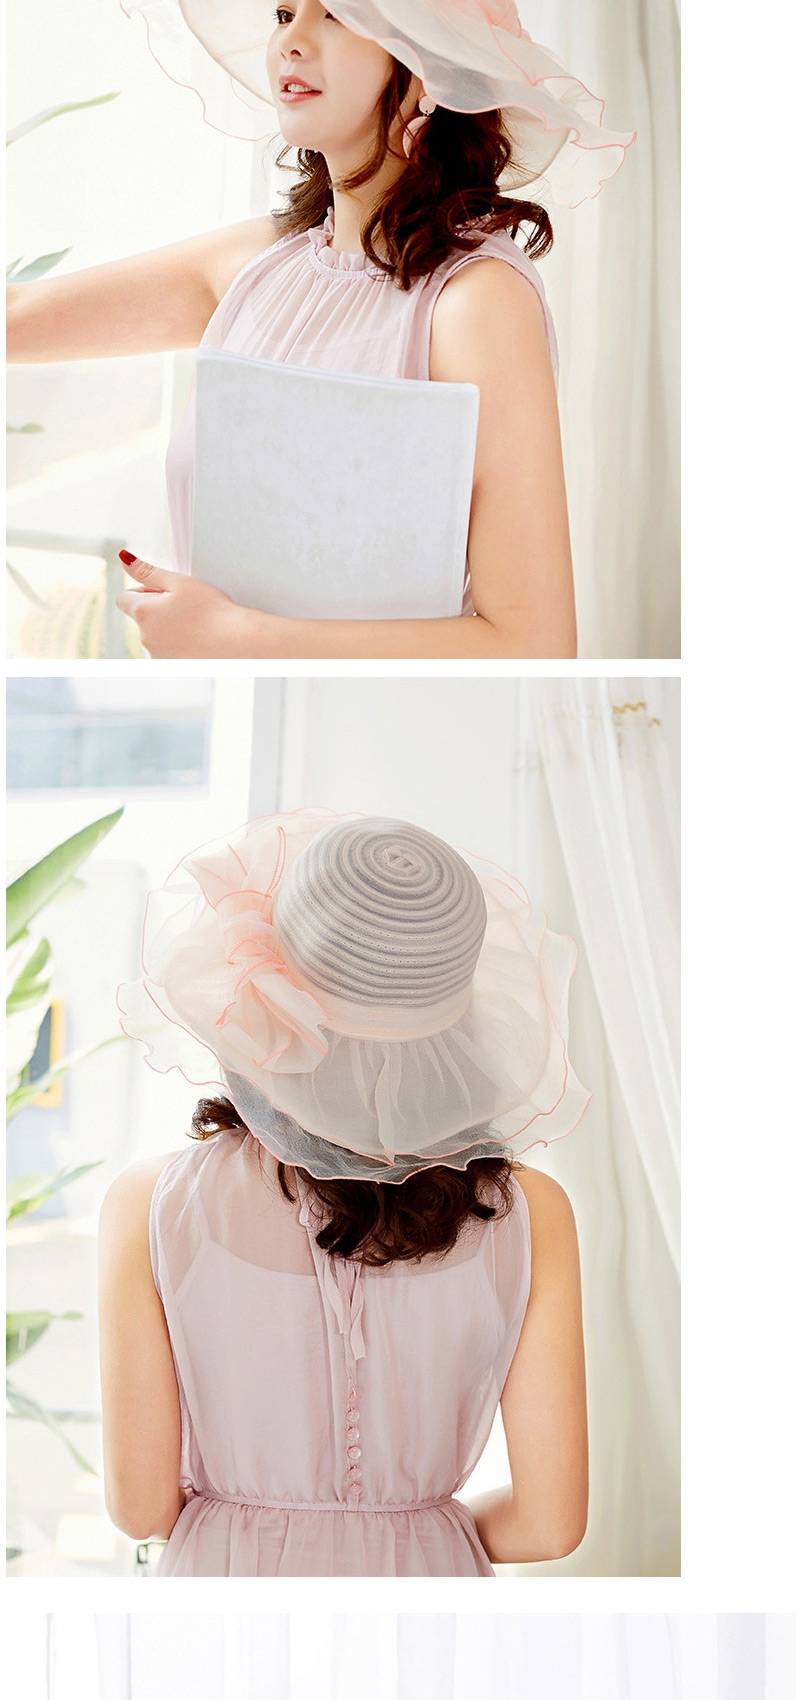 Fashion Light Pink Flower Shape Decorated Pure Color Hat,Sun Hats